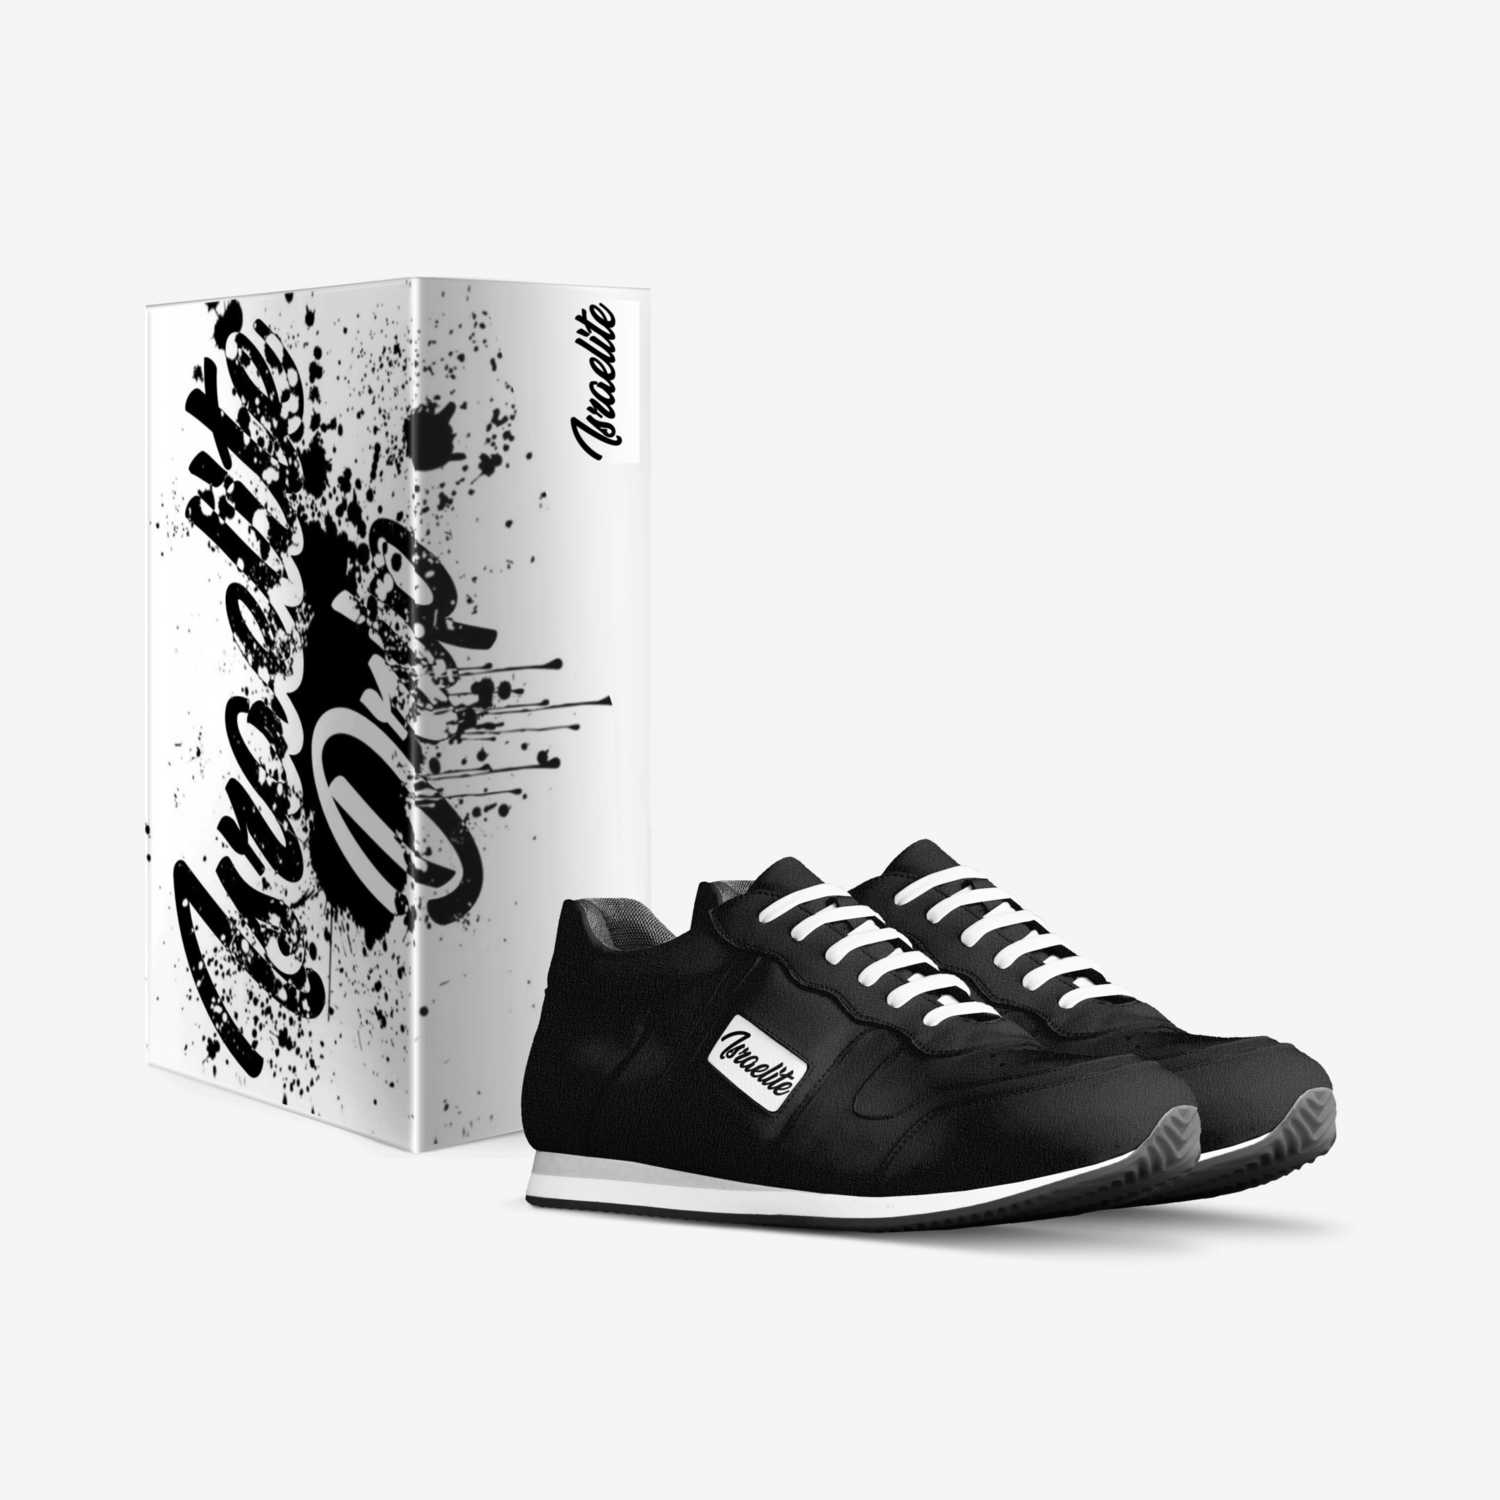 Drippy Blacks custom made in Italy shoes by Damitris Thomas | Box view